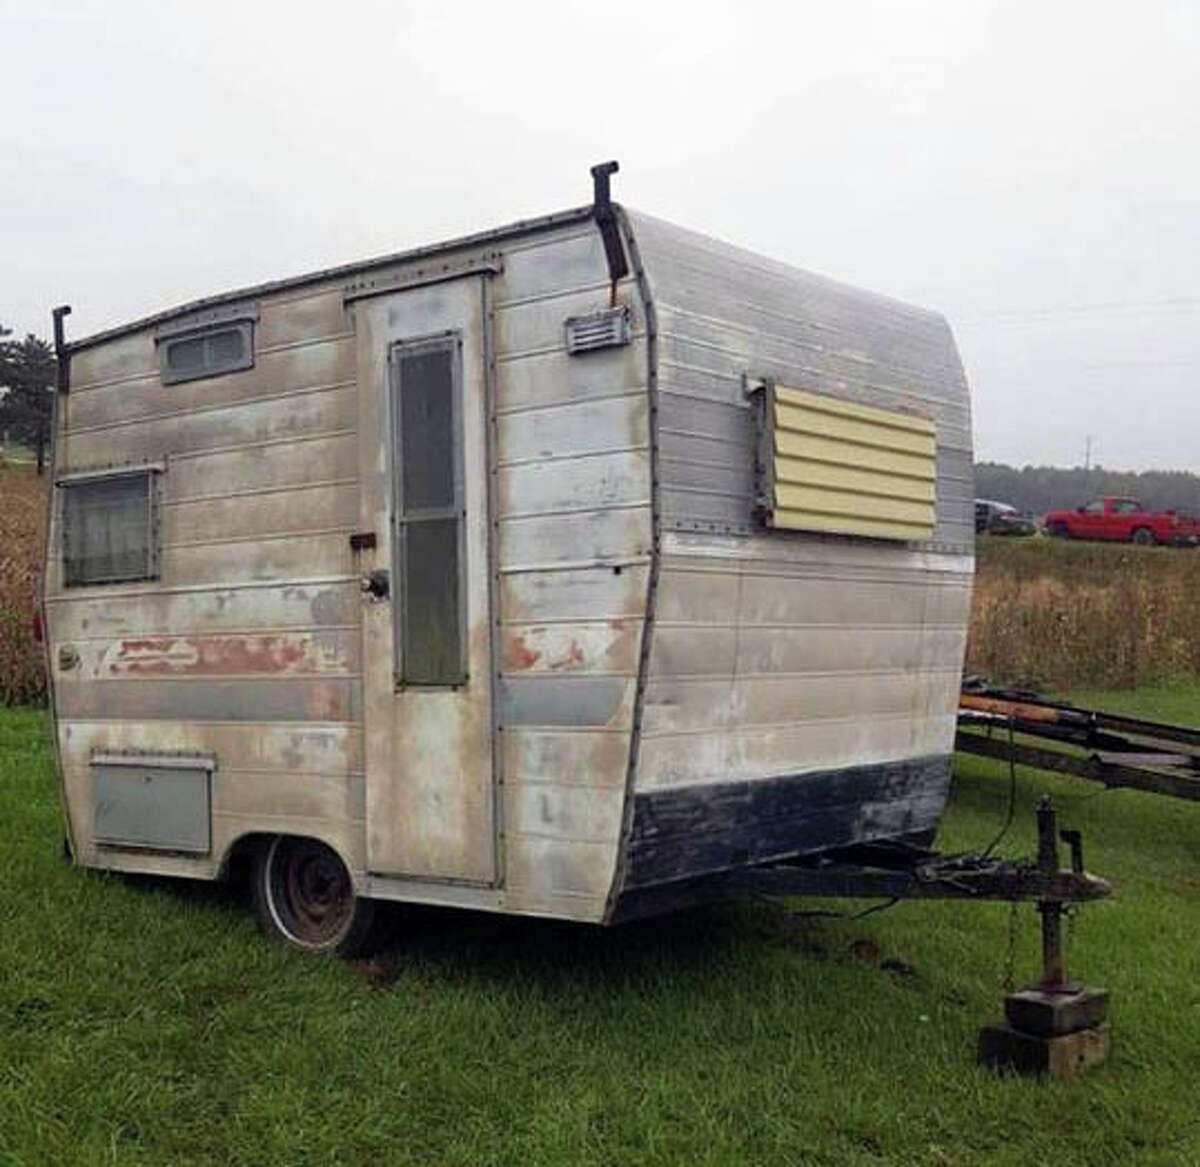 This 1996 Aristocrat camper was recently stolen in Unionville.